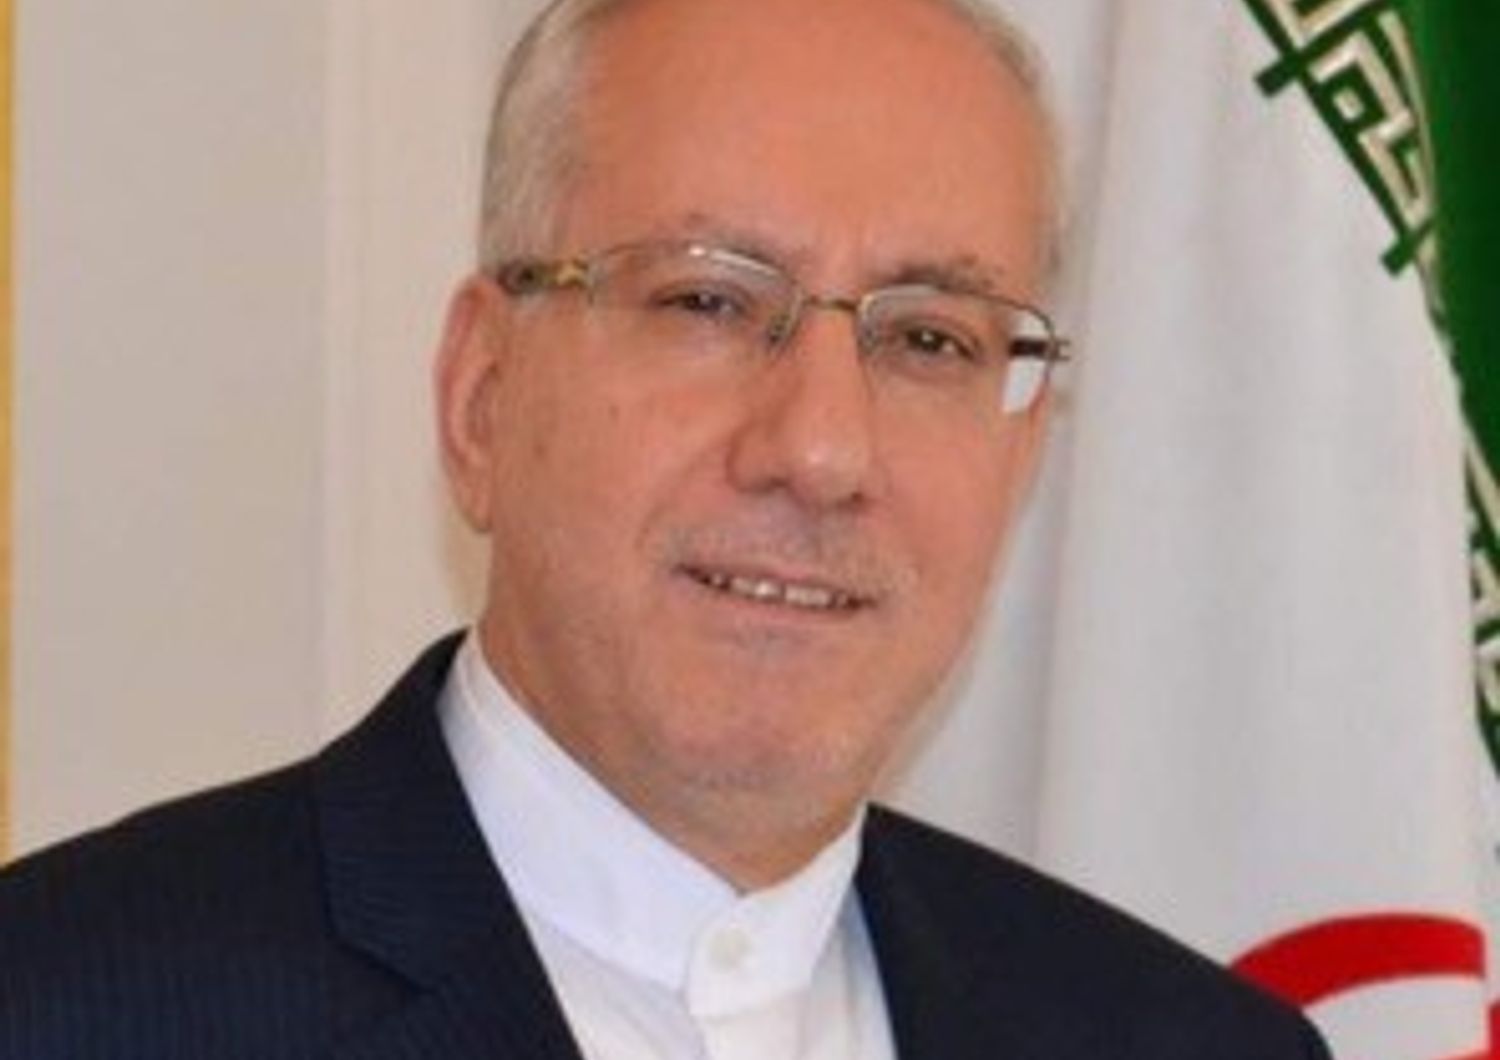 L'ambasciatore iraniano in Italia, Hamid Bayat